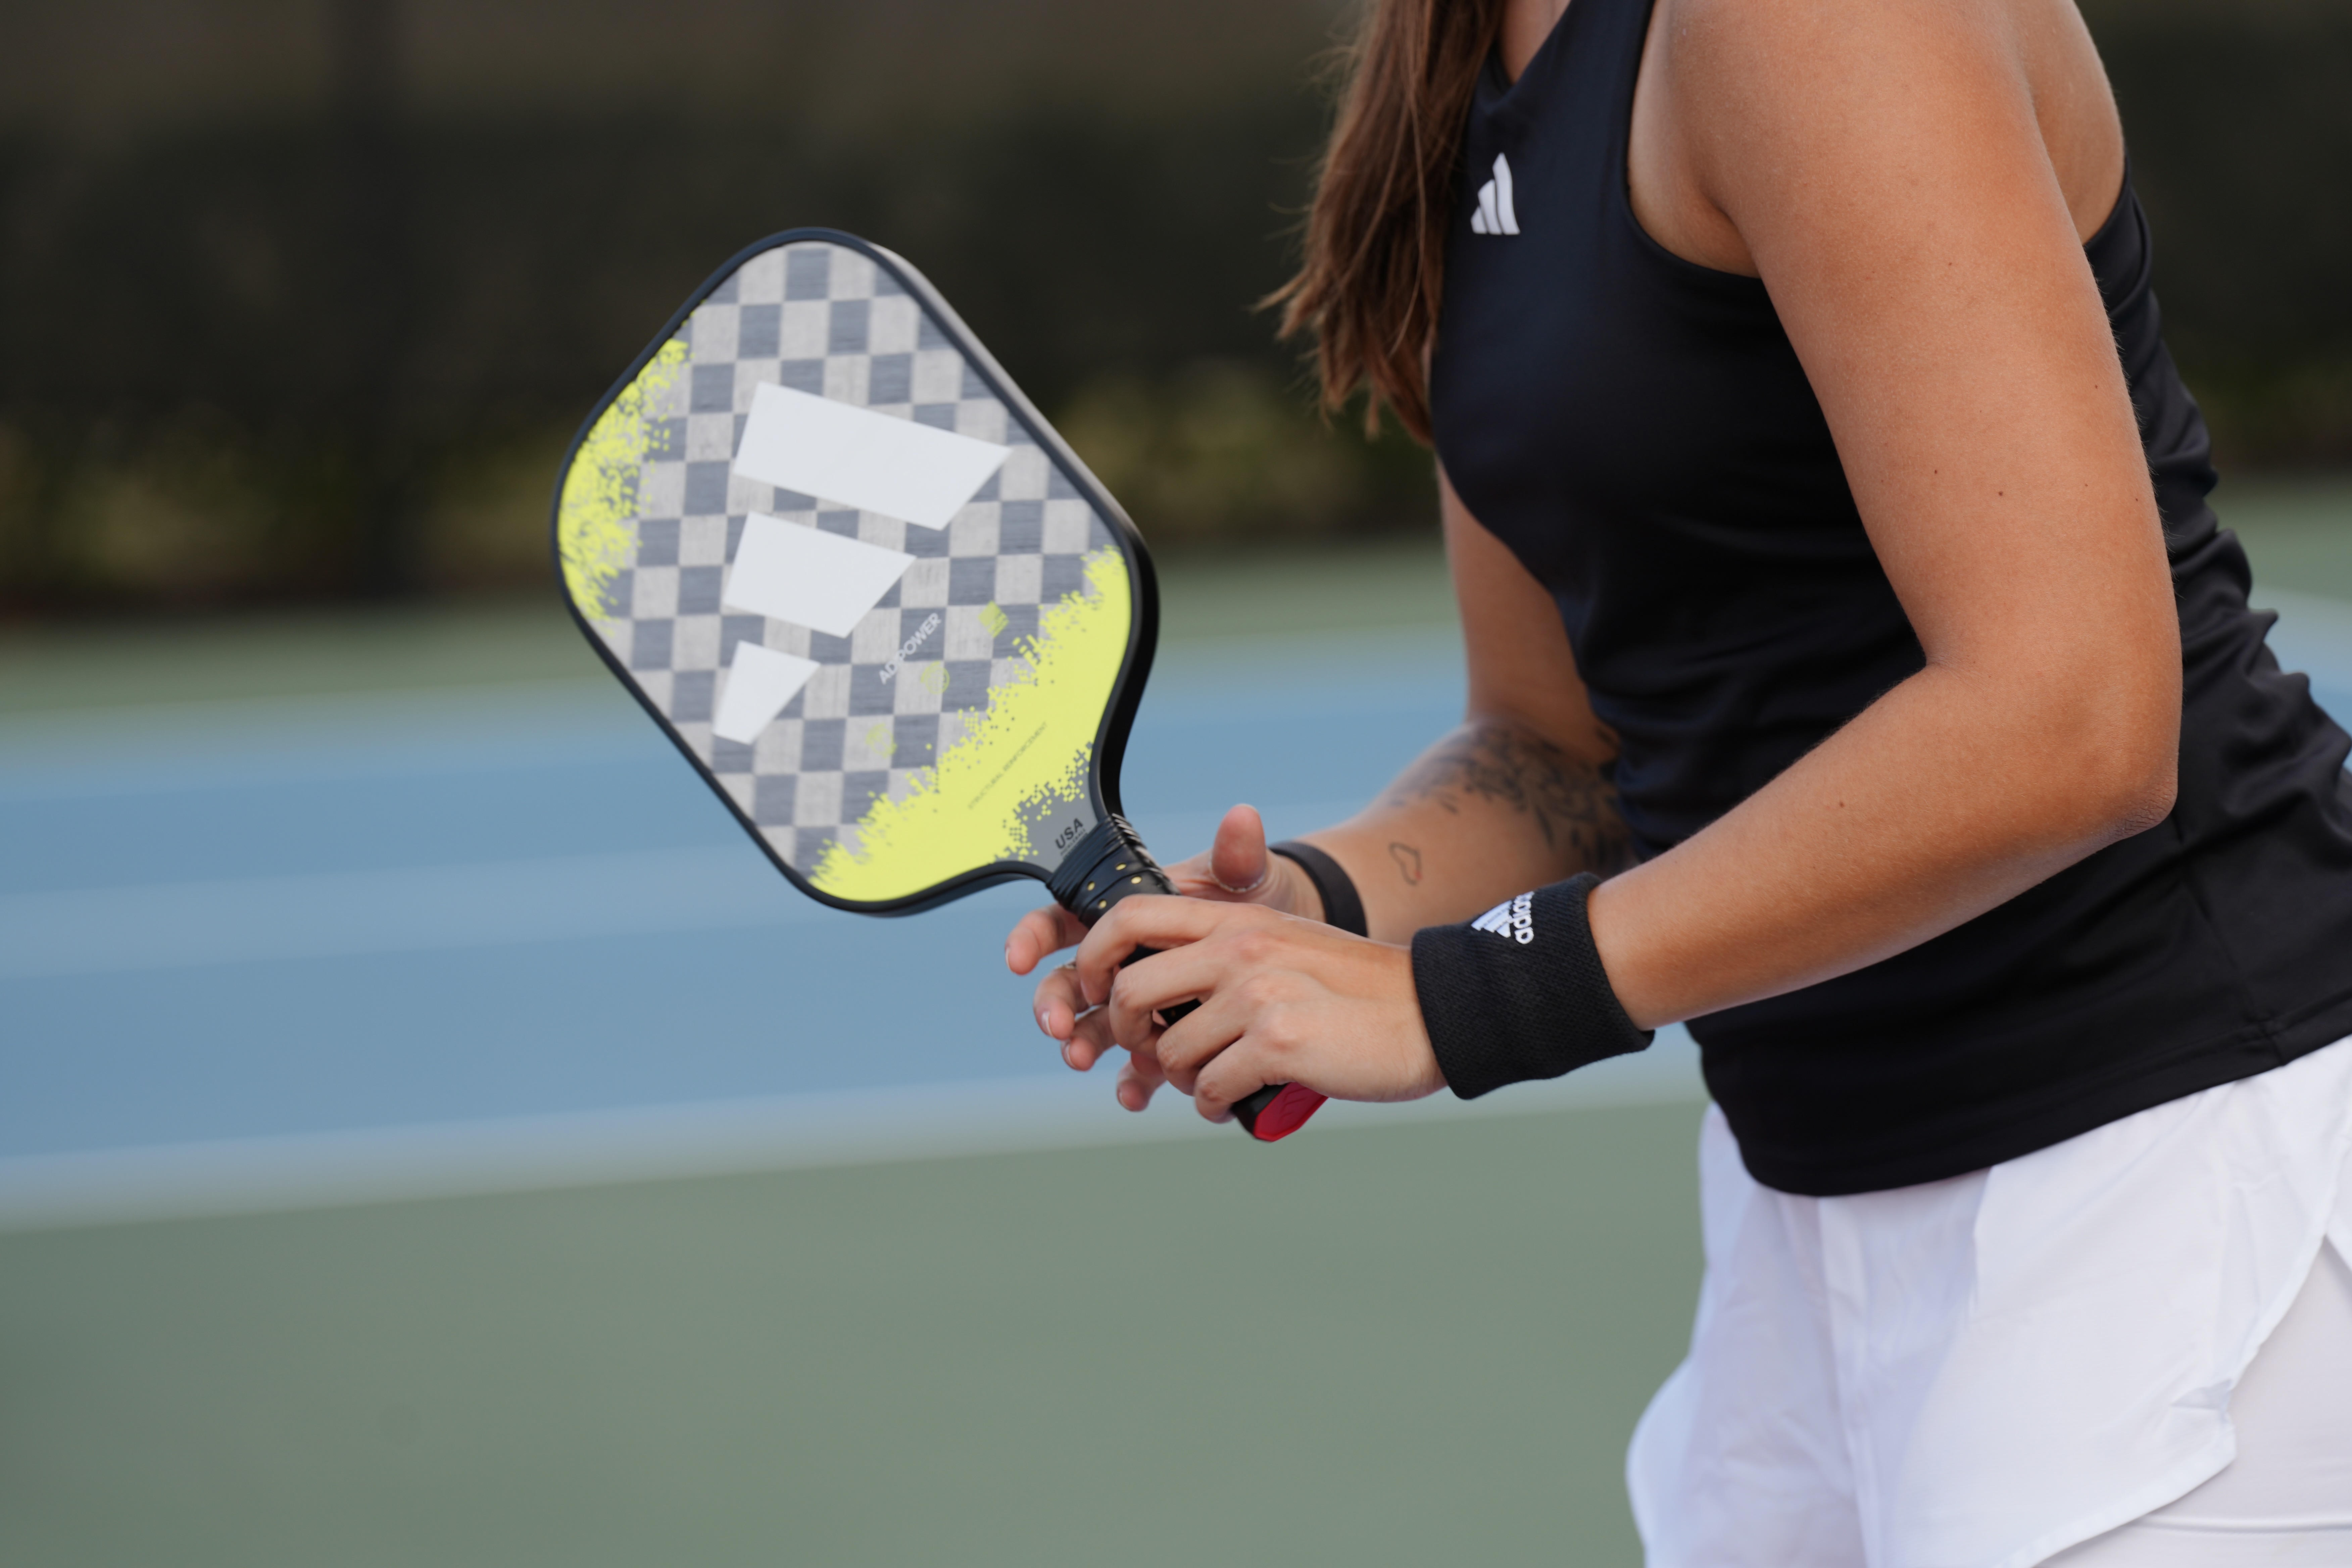 Adidas padel racket technologies